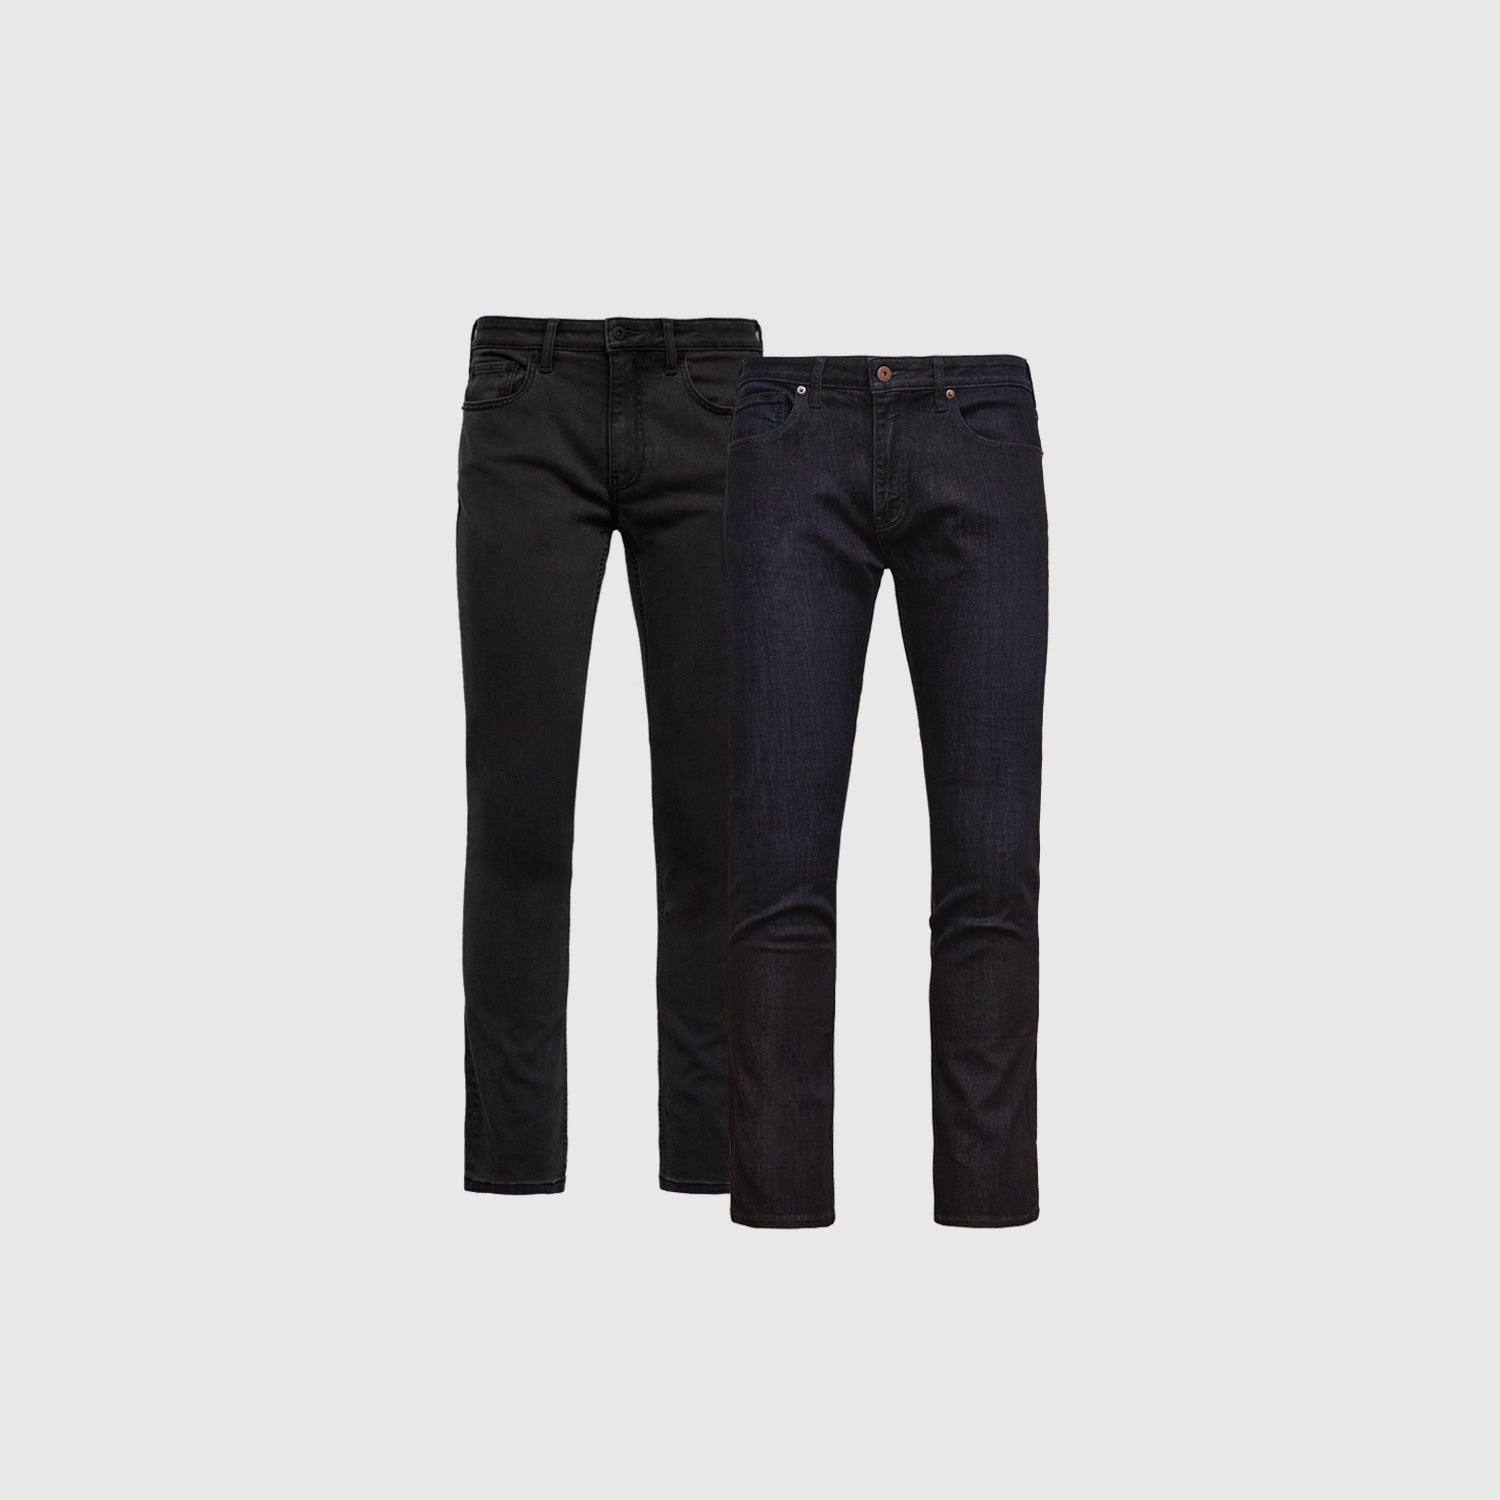 Faded Men Black Slim Fit Denim Jeans at Rs 700/piece in New Delhi | ID:  2851357177230